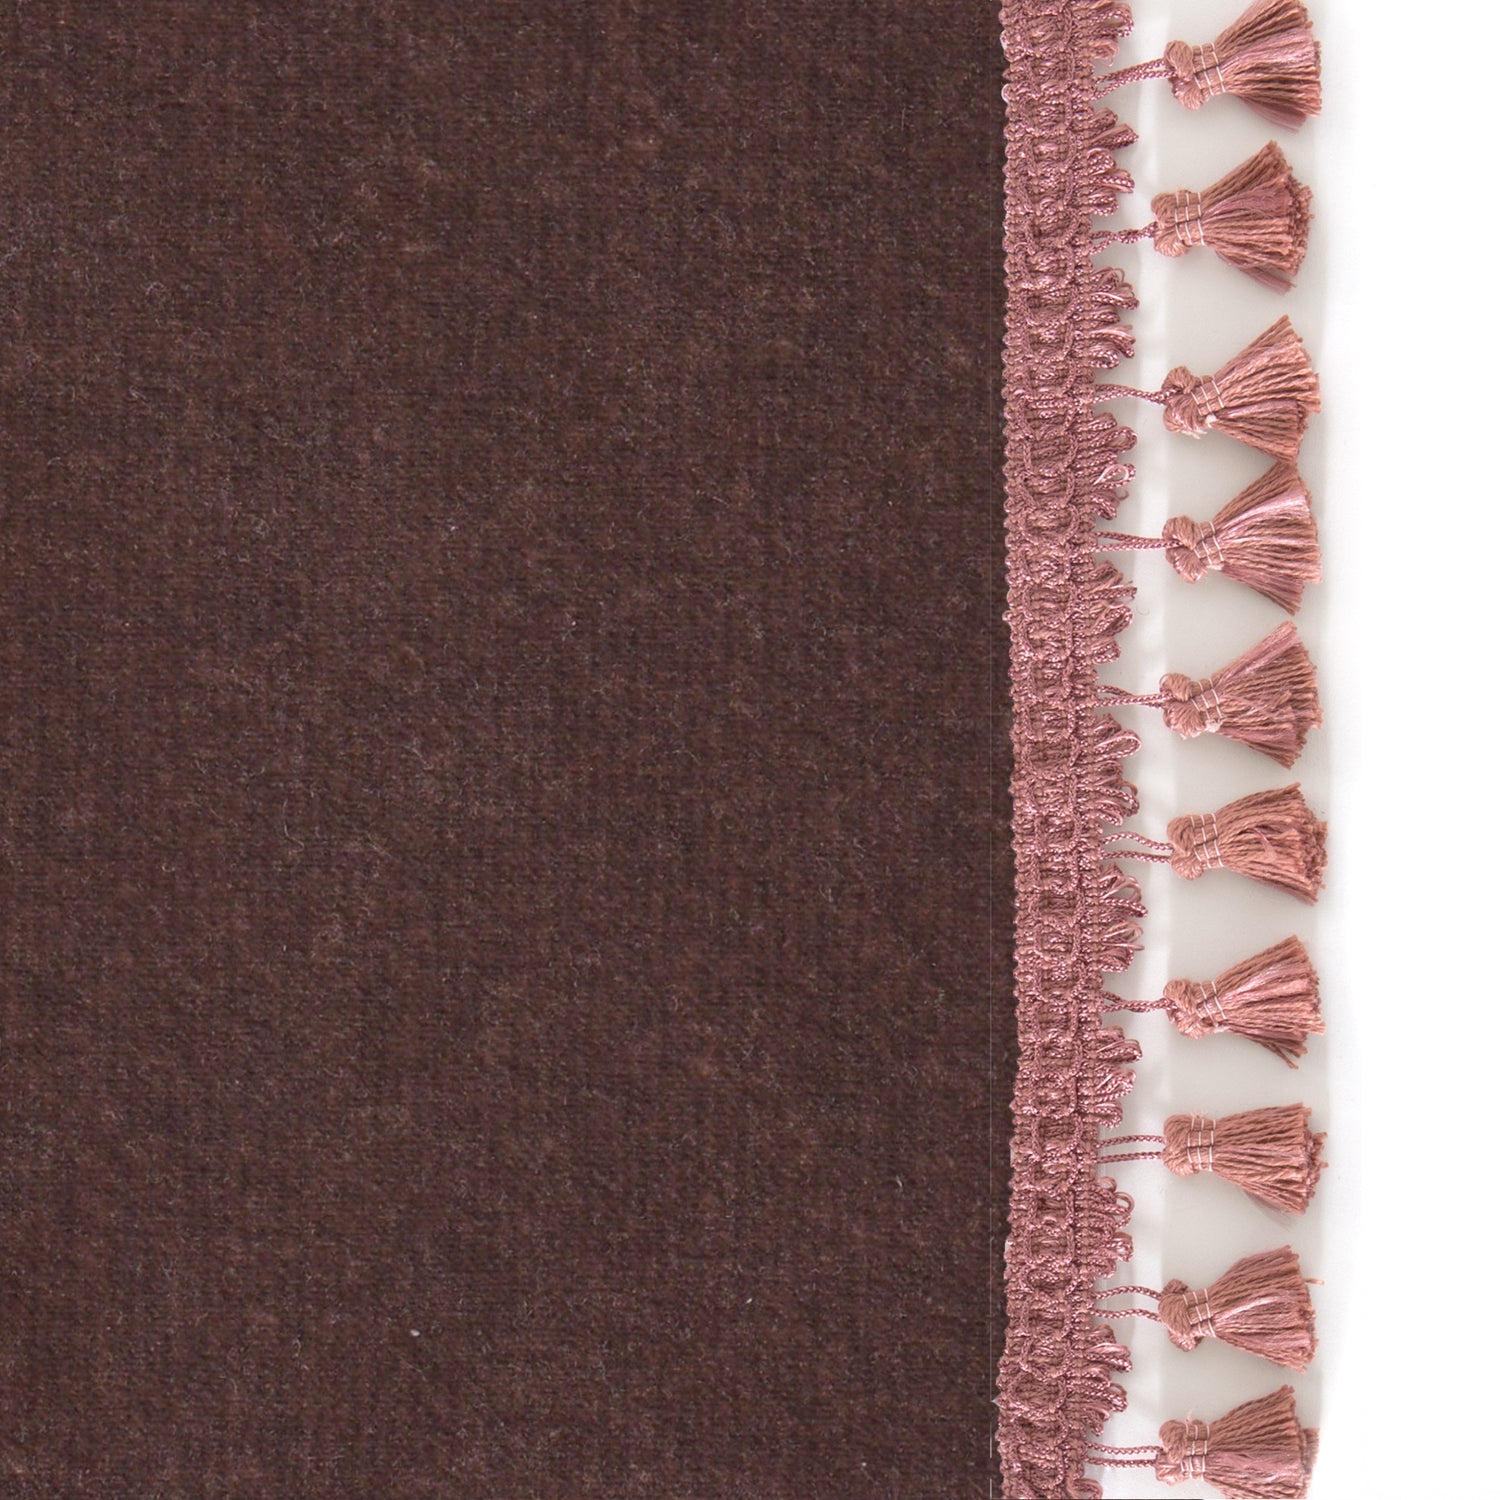 Upclose picture of Walnut Velvet custom curtain with dusty rose tassel trim